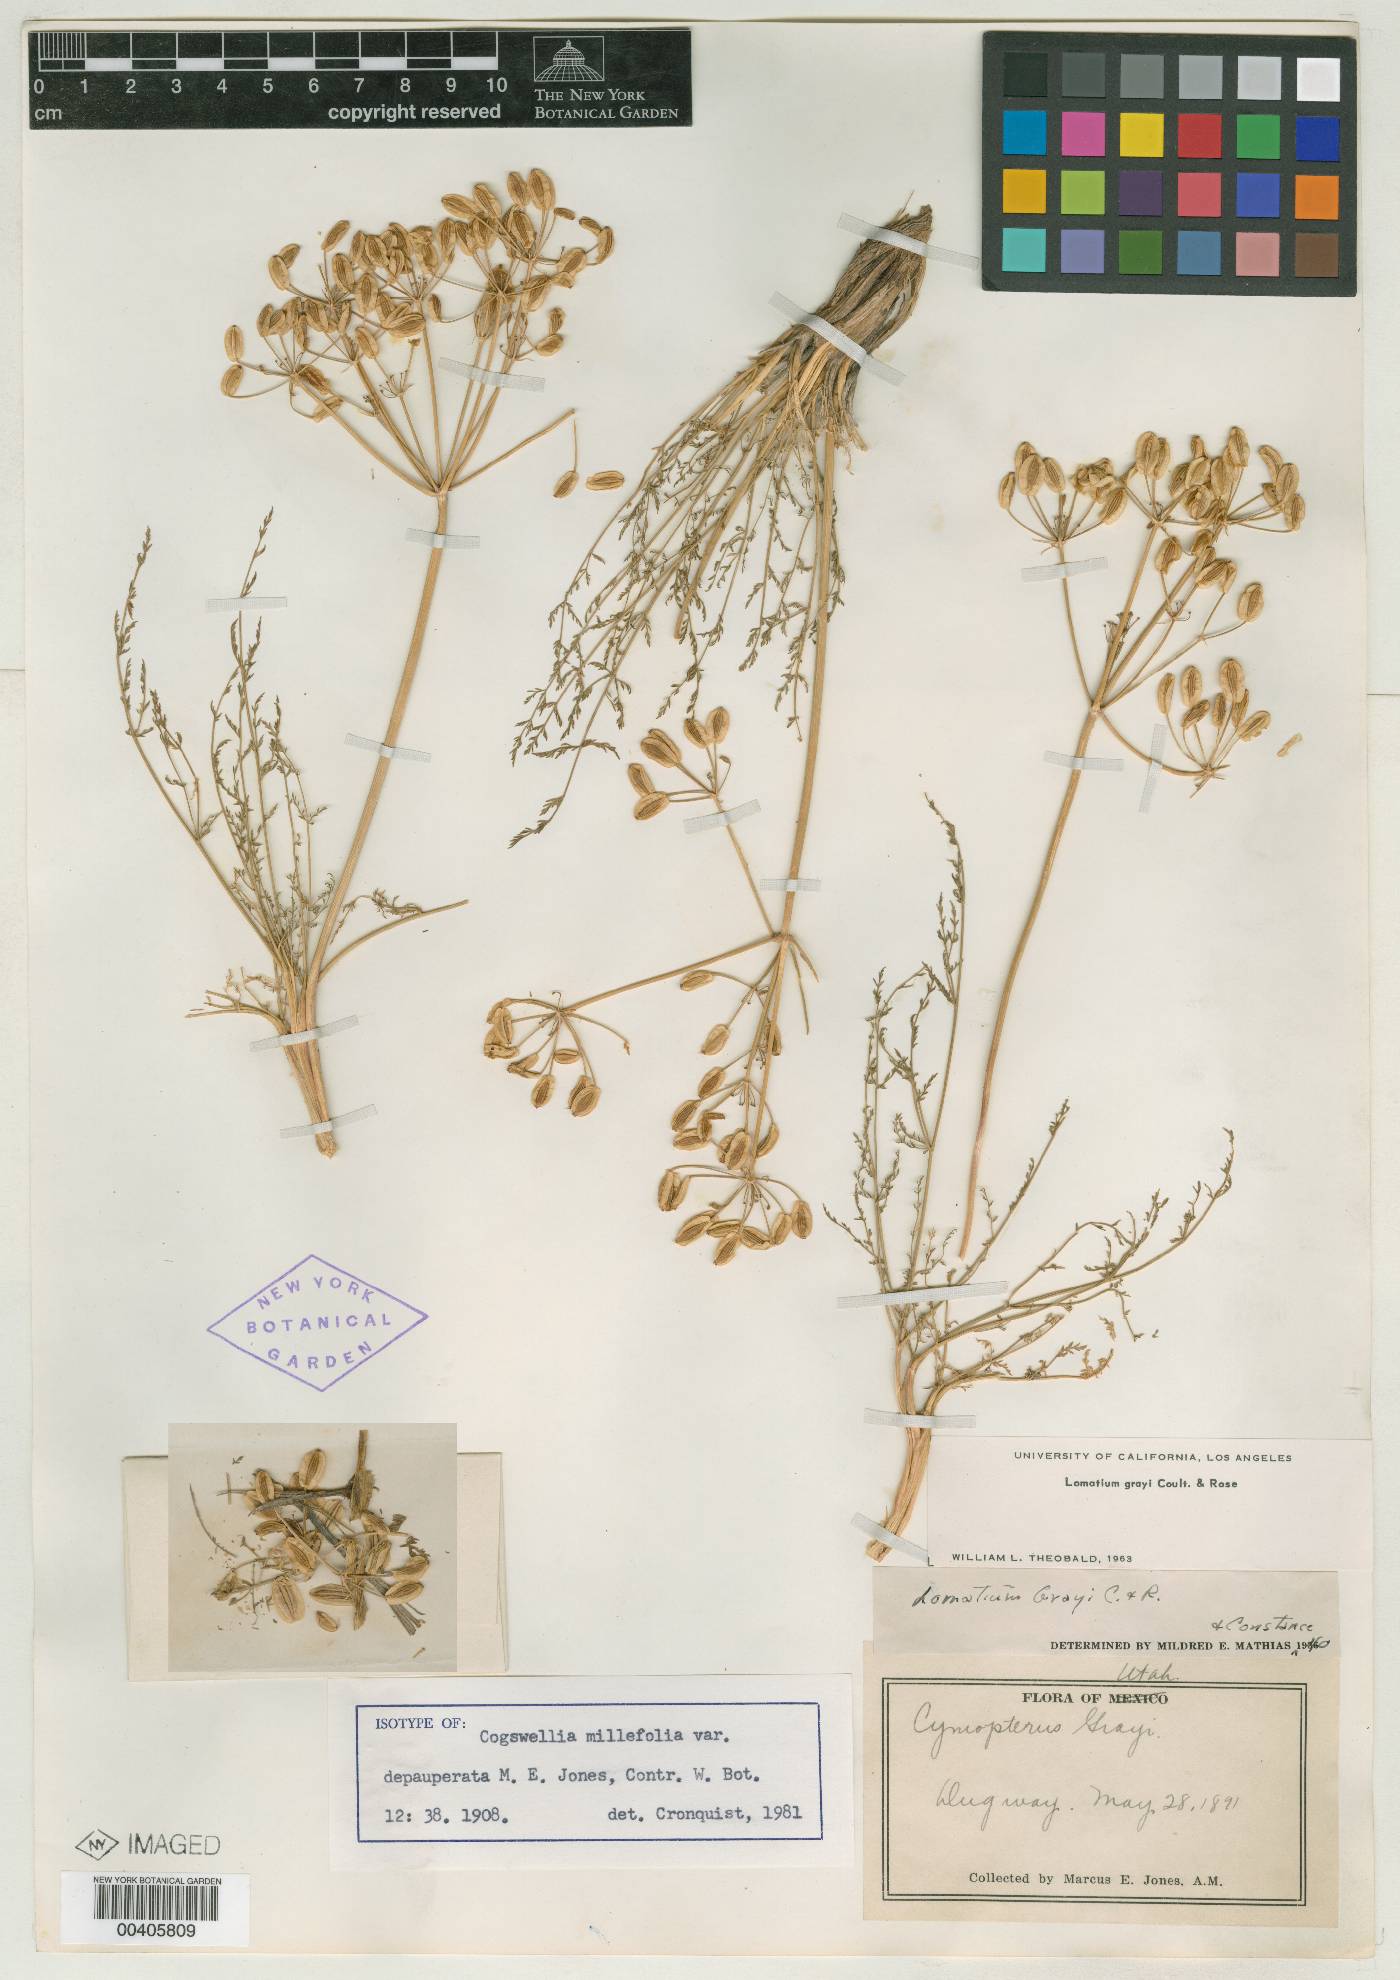 Cogswellia millefolia var. depauperata image